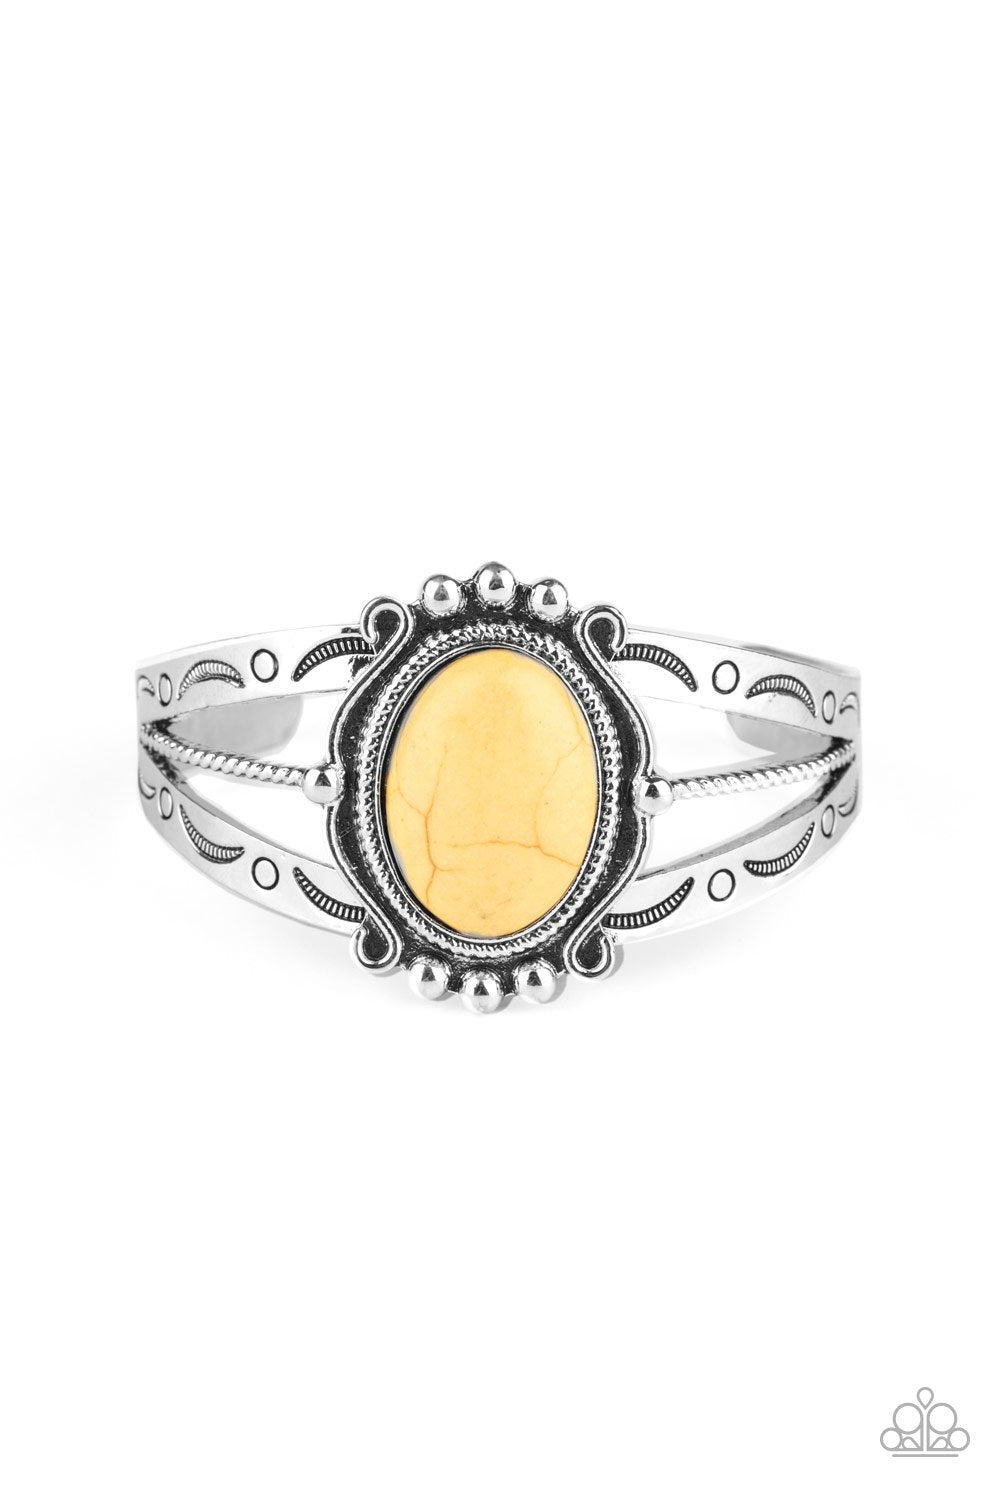 Very TERRA-torial Yellow Stone Cuff Bracelet - Paparazzi Accessories- lightbox - CarasShop.com - $5 Jewelry by Cara Jewels